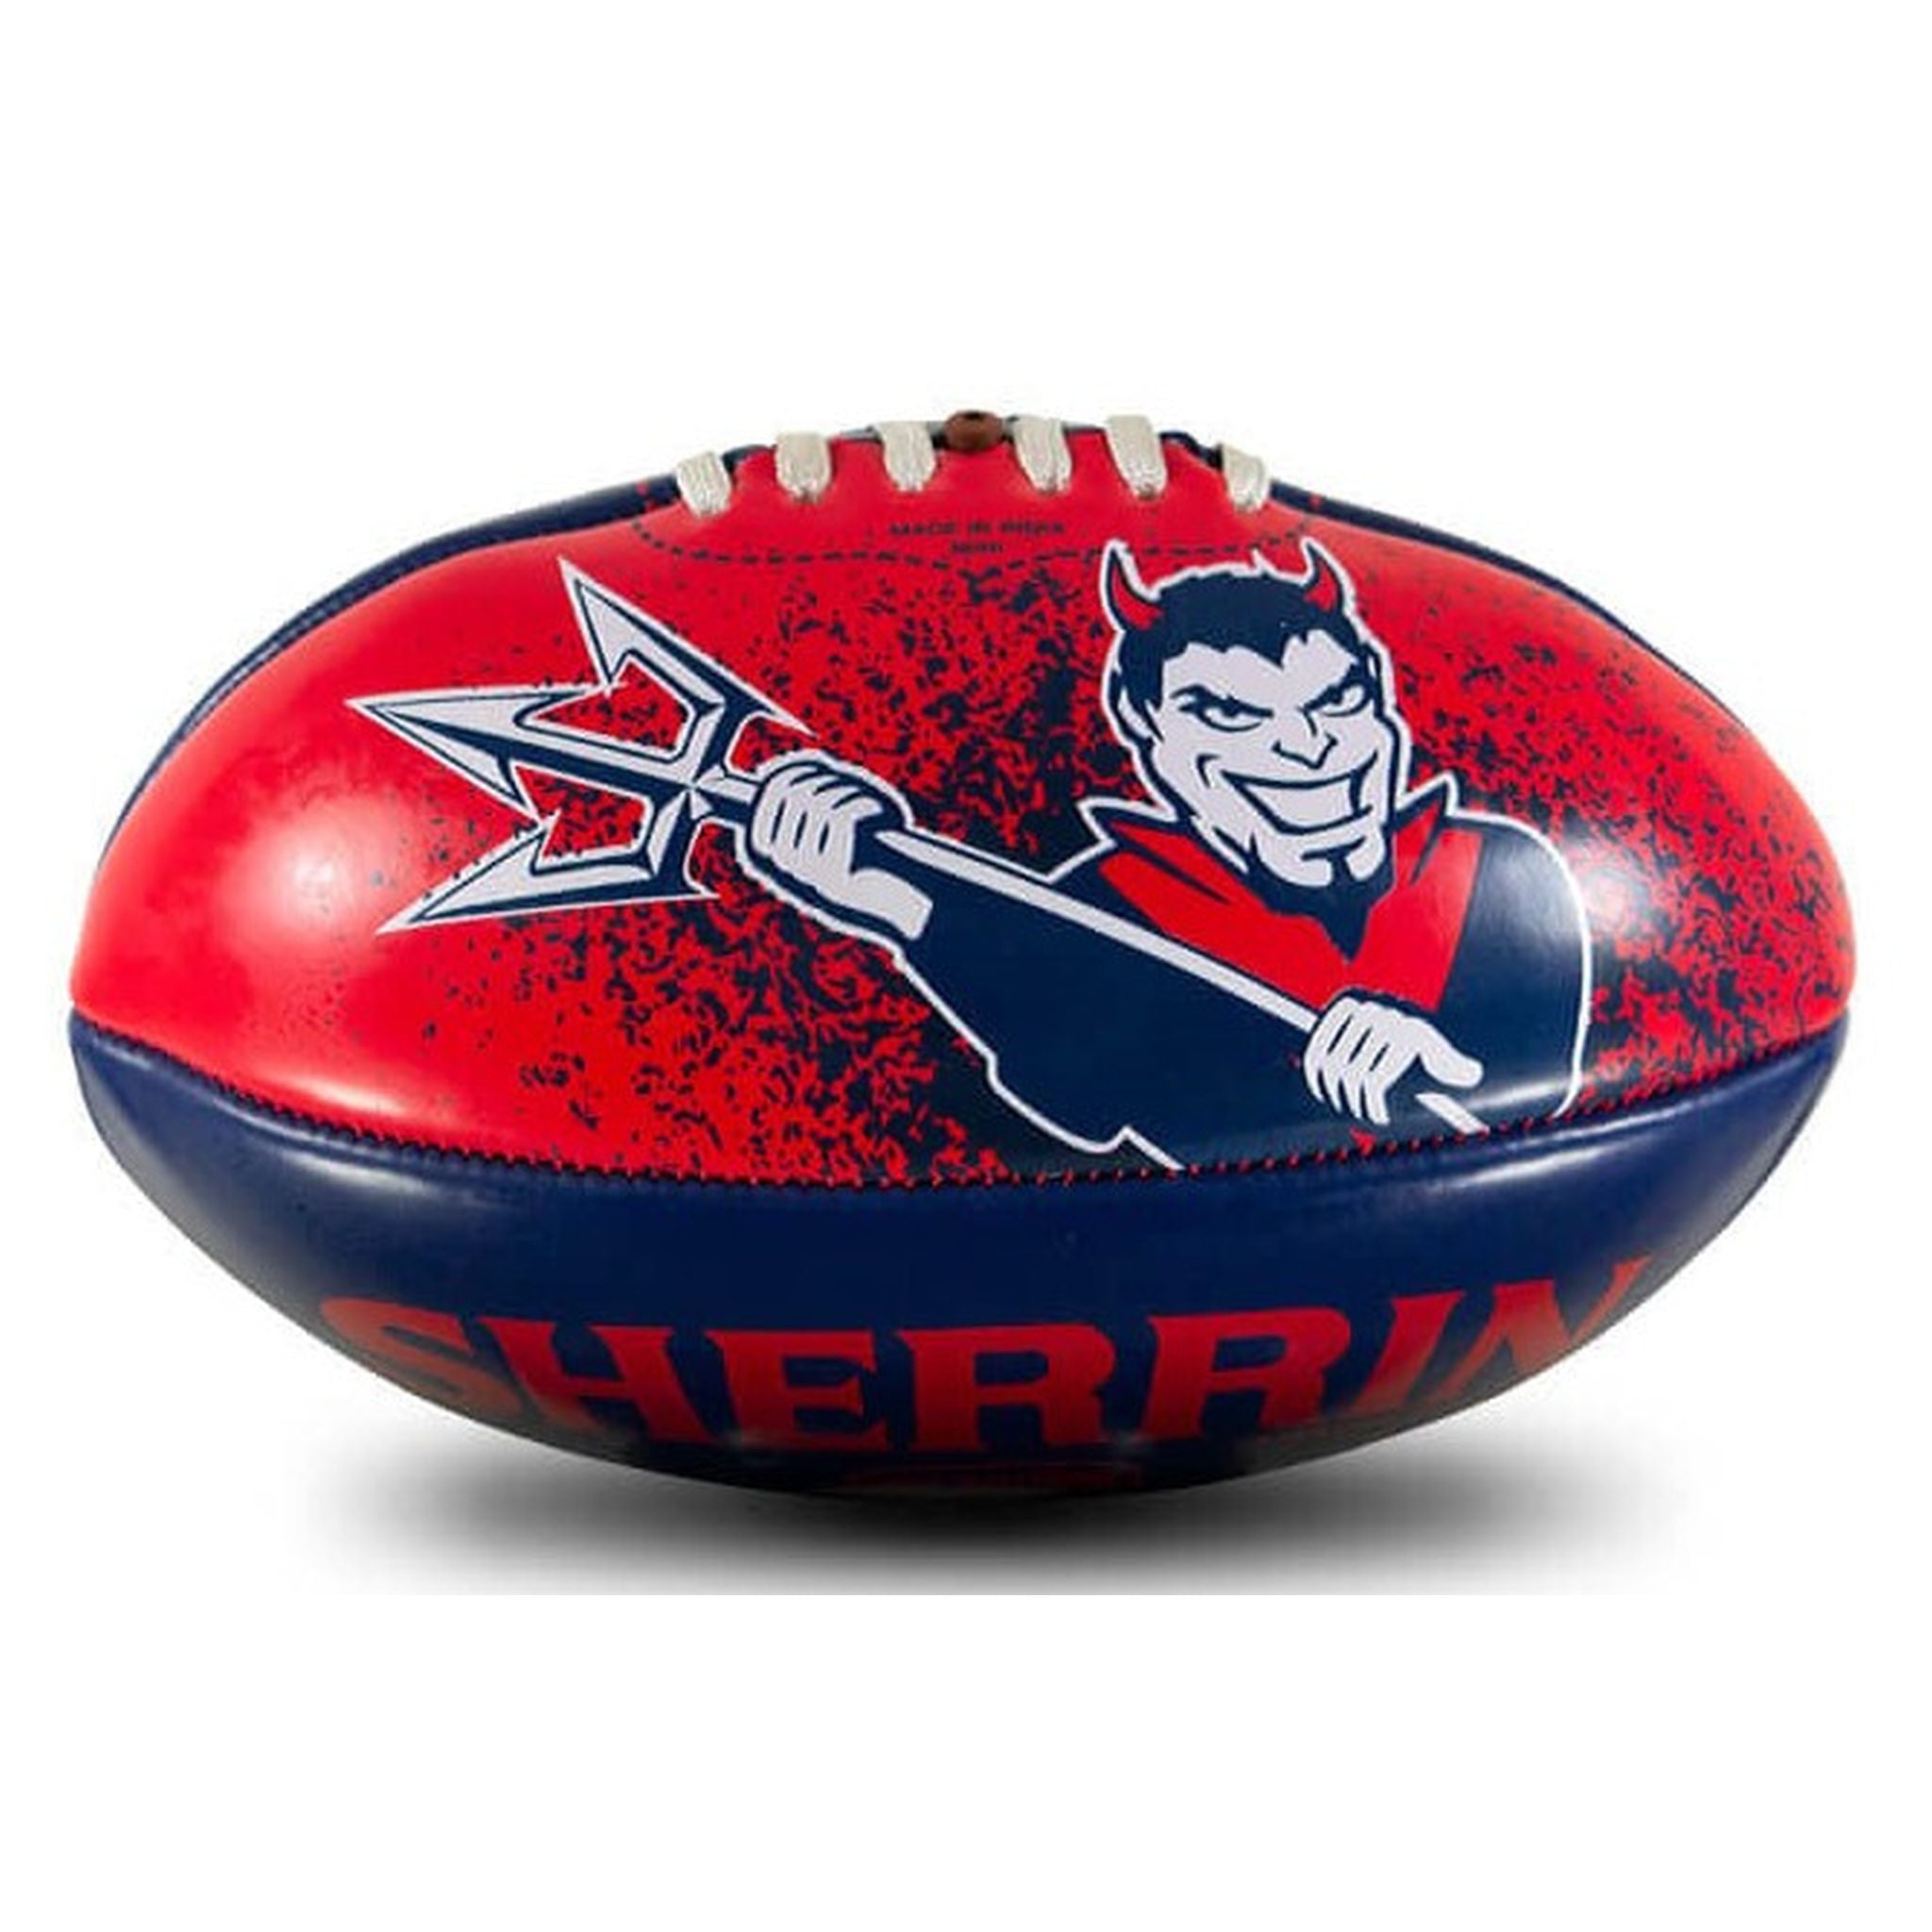 Sherrin Melbourne Demons AFL Softie 20cm Football